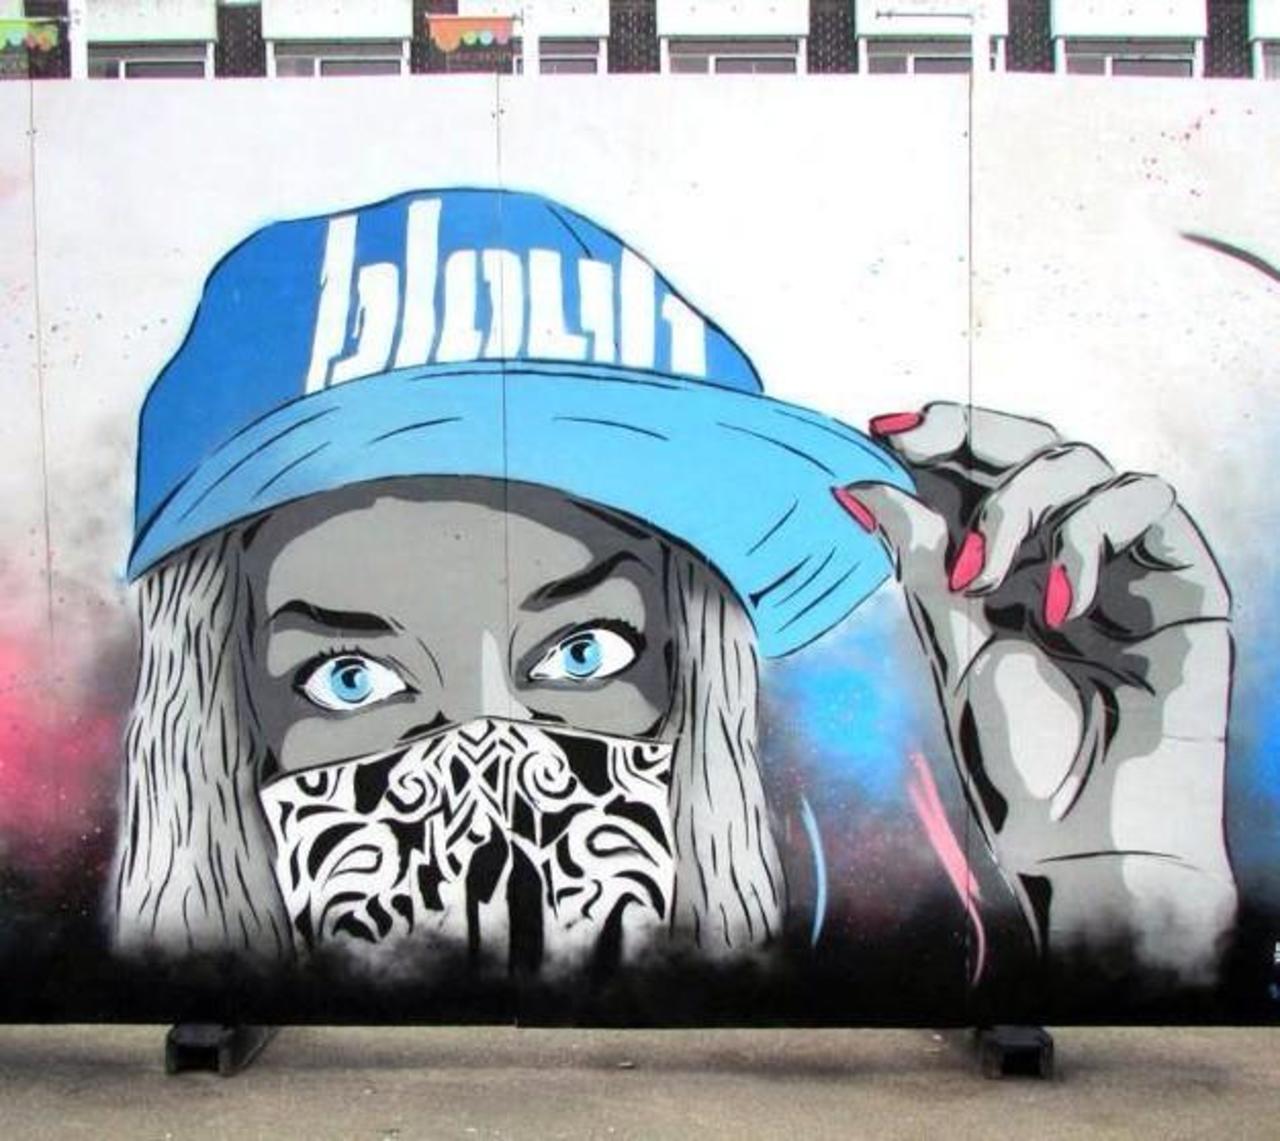 Artist Blouh at the Glouchester Paint Jamb, London, UK #art #mural #graffiti #streetart https://t.co/WJErqnSZjM